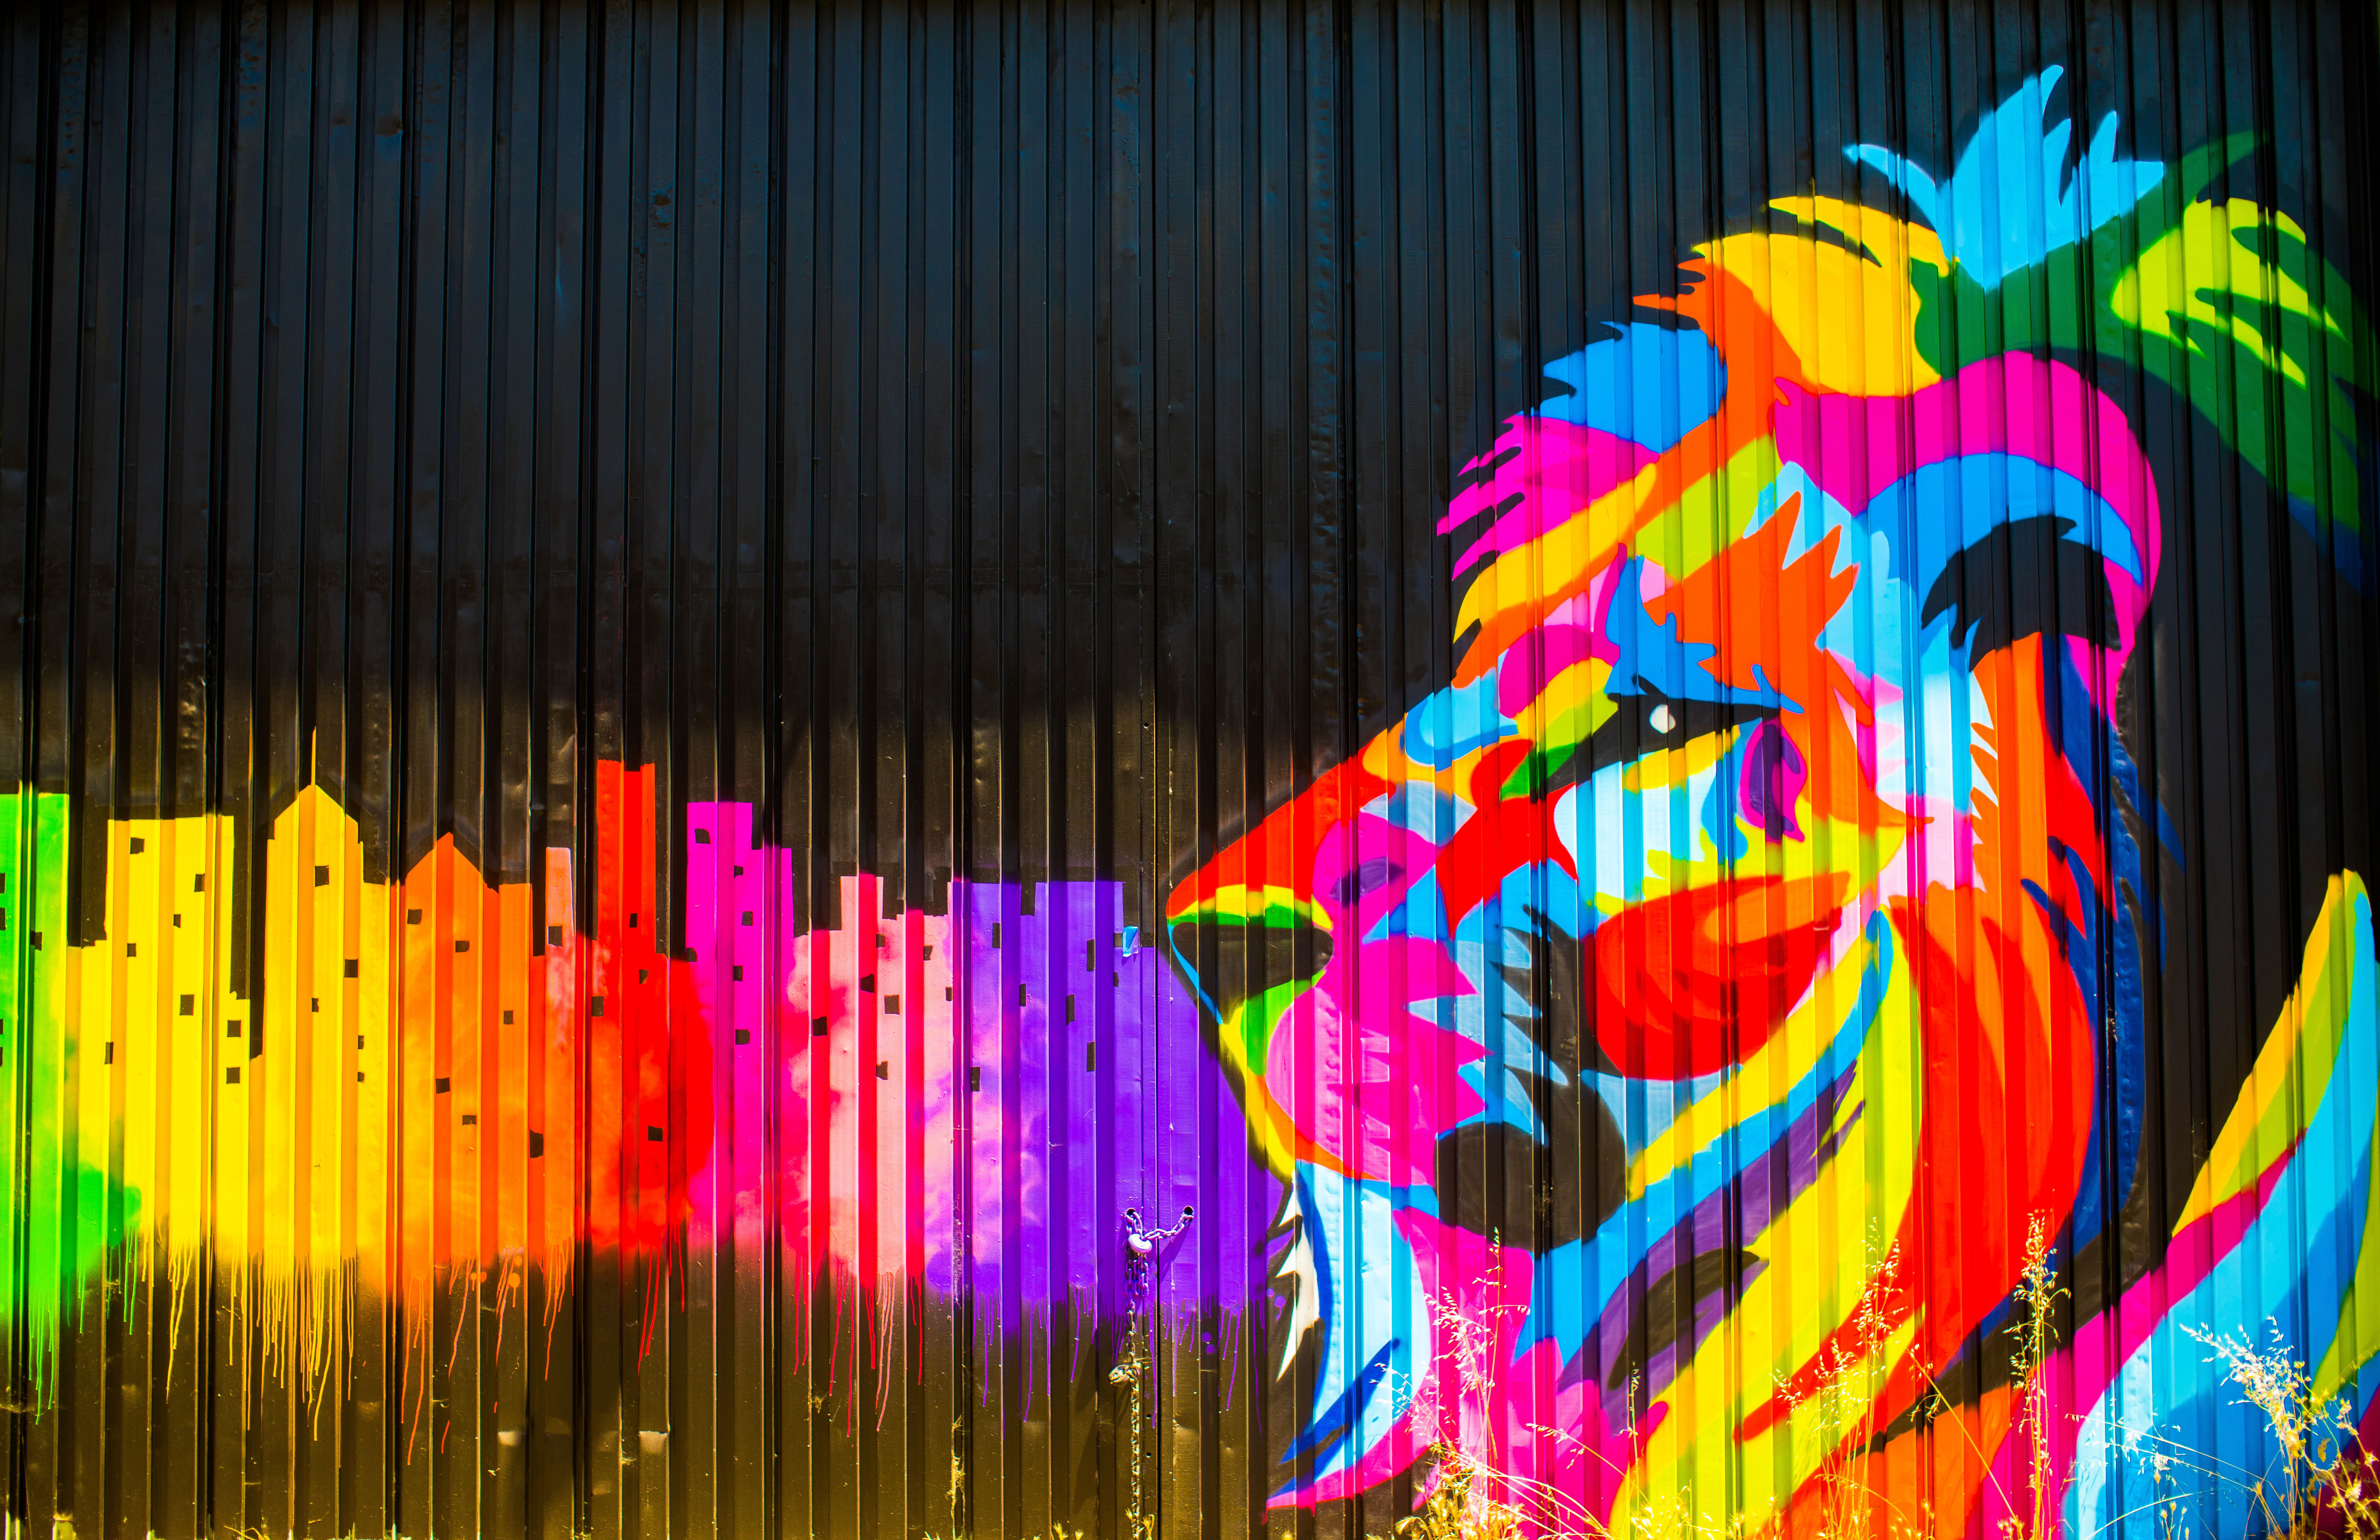 Lion Graffiti 5k HD Artist 4k Wallpapers Images Backgrounds